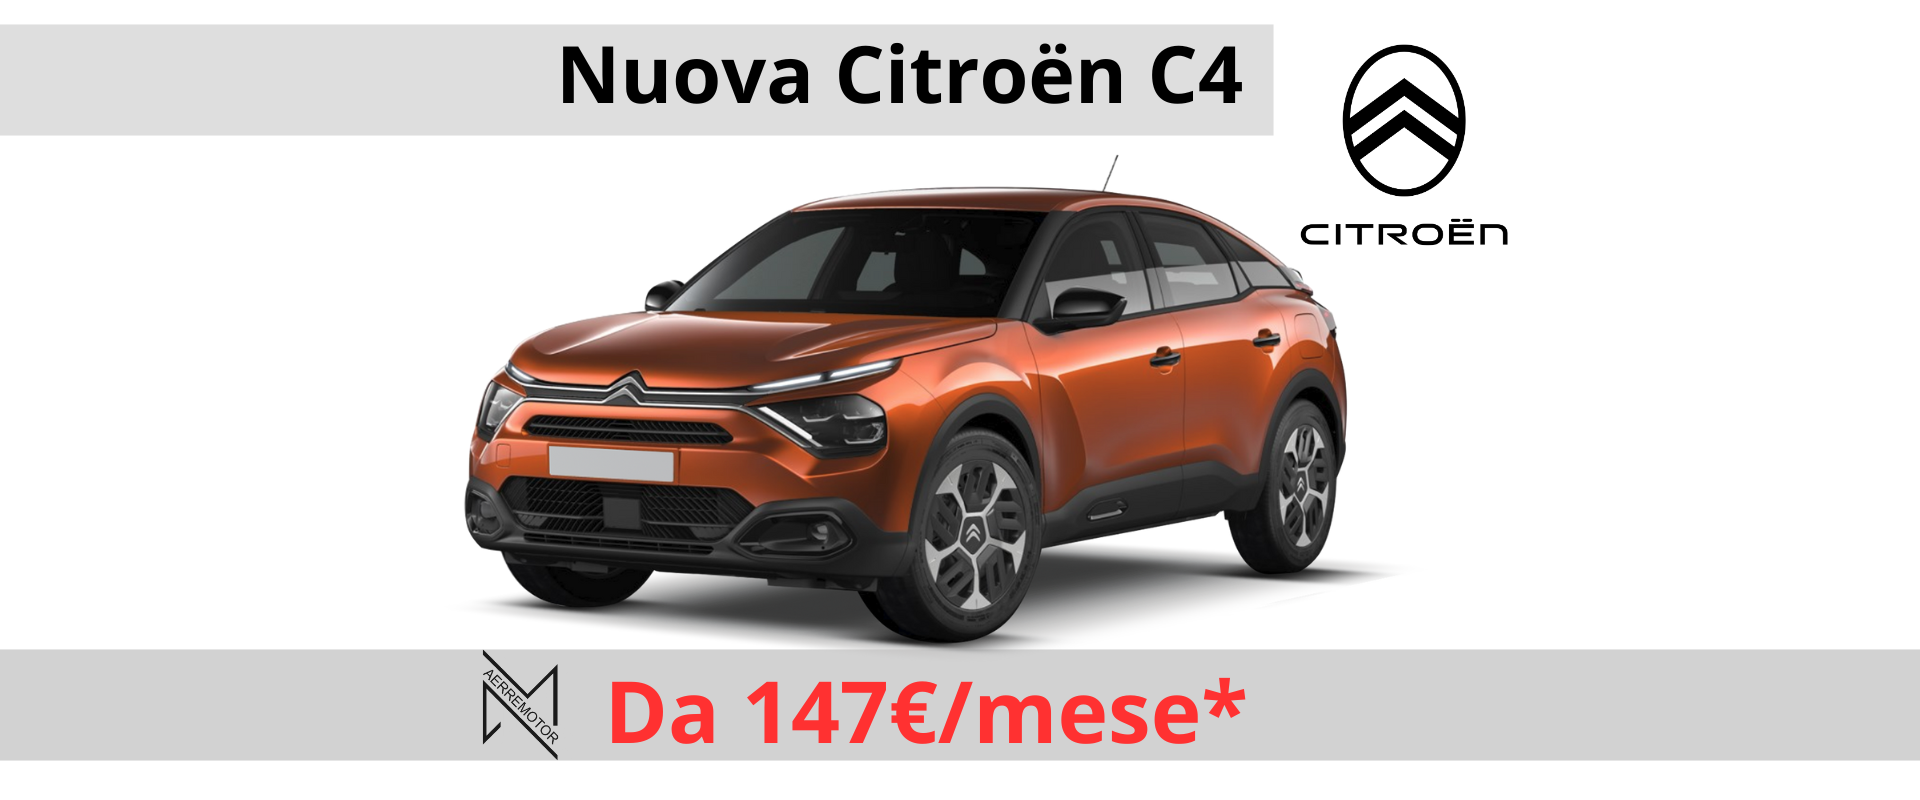 Nuova Citroën C4